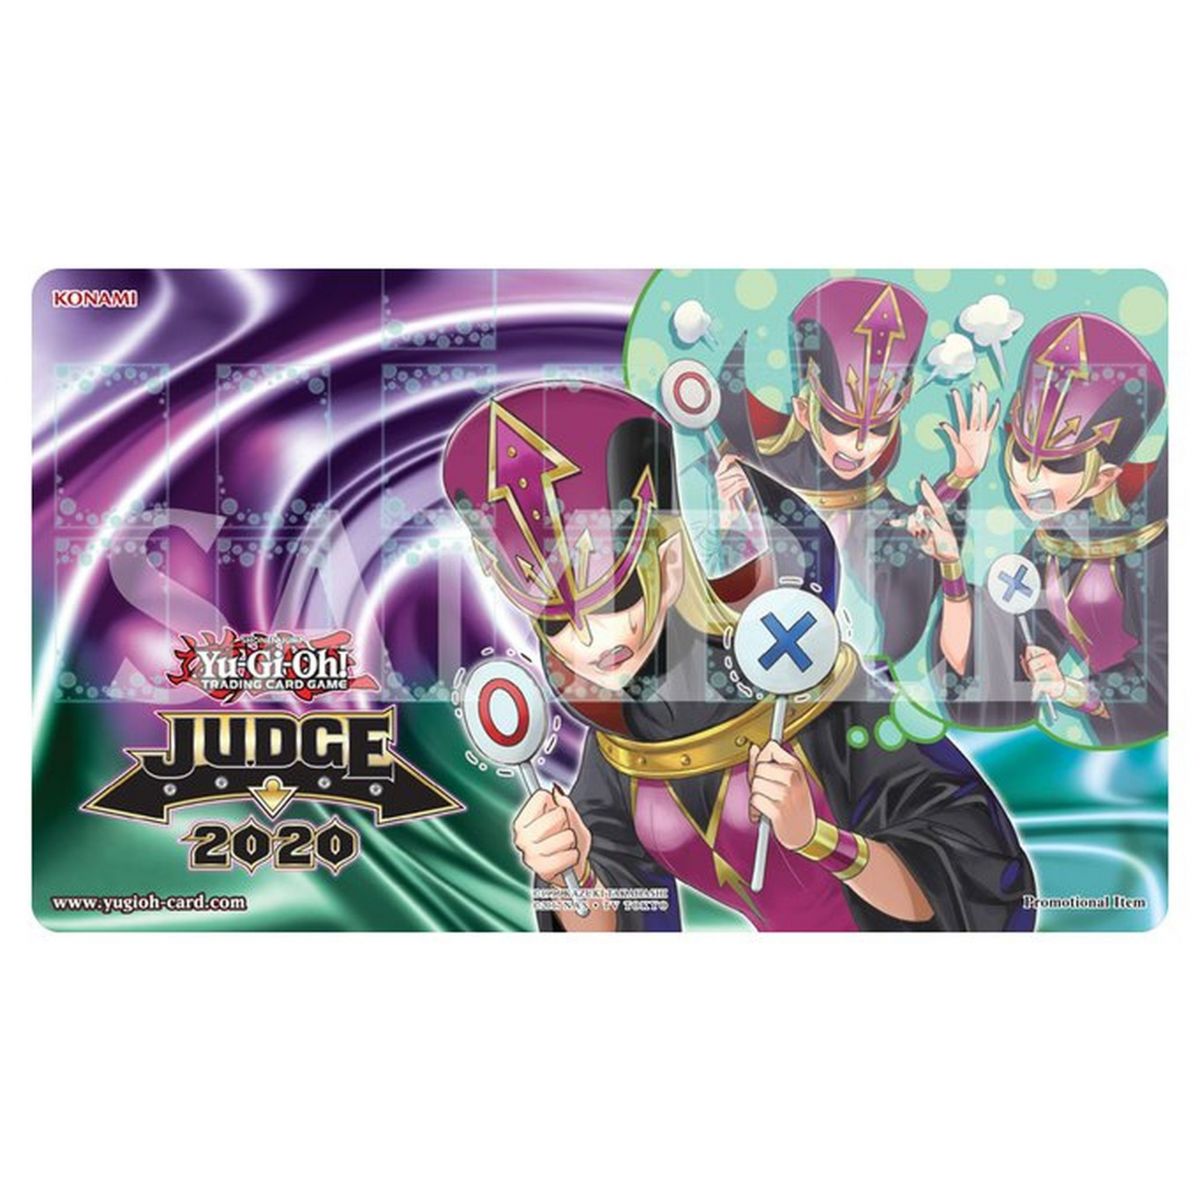 Item Yu-Gi-Oh! - Playmat - Judge 2020 - "Head Judging" - SEALED